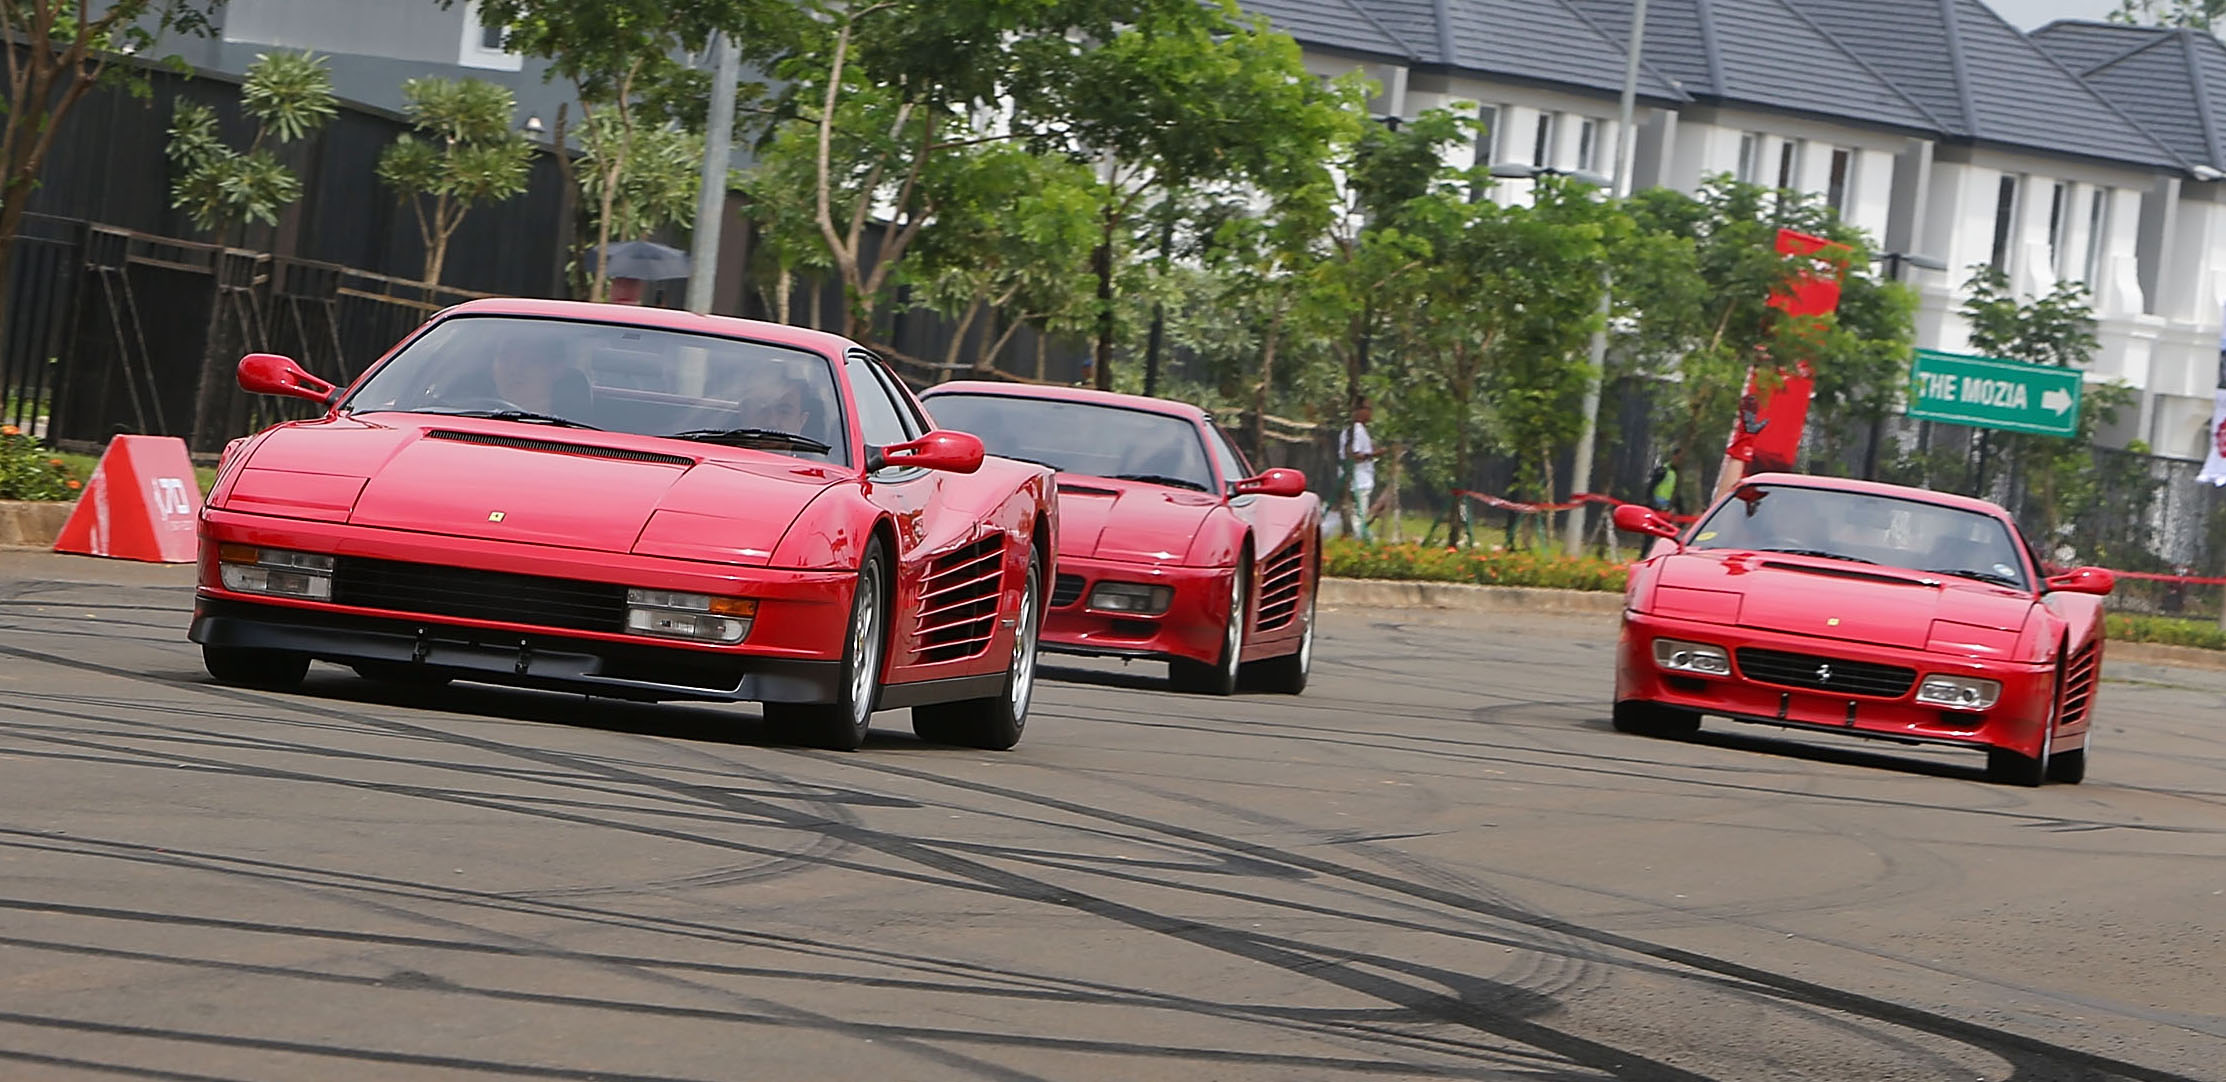 170149-car-festival_of_speed_indonesia.jpg